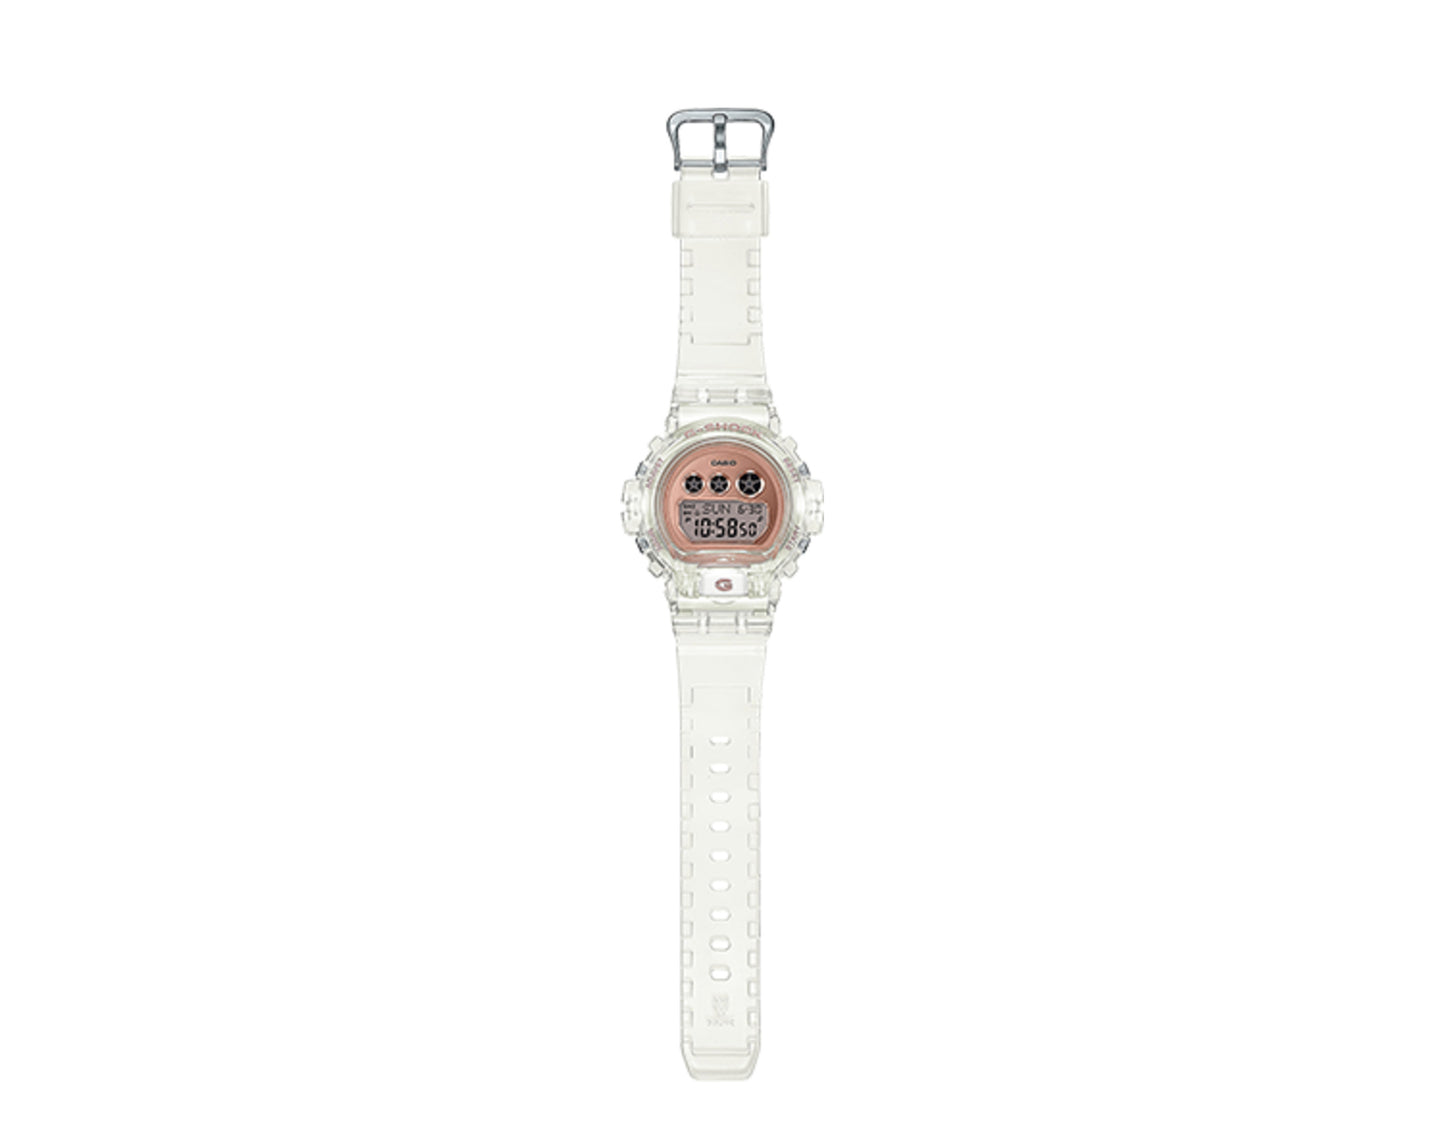 Casio G-Shock GMDS6900 Metallic Digital Skeleton Resin Clear Watch GMDS6900SR-7